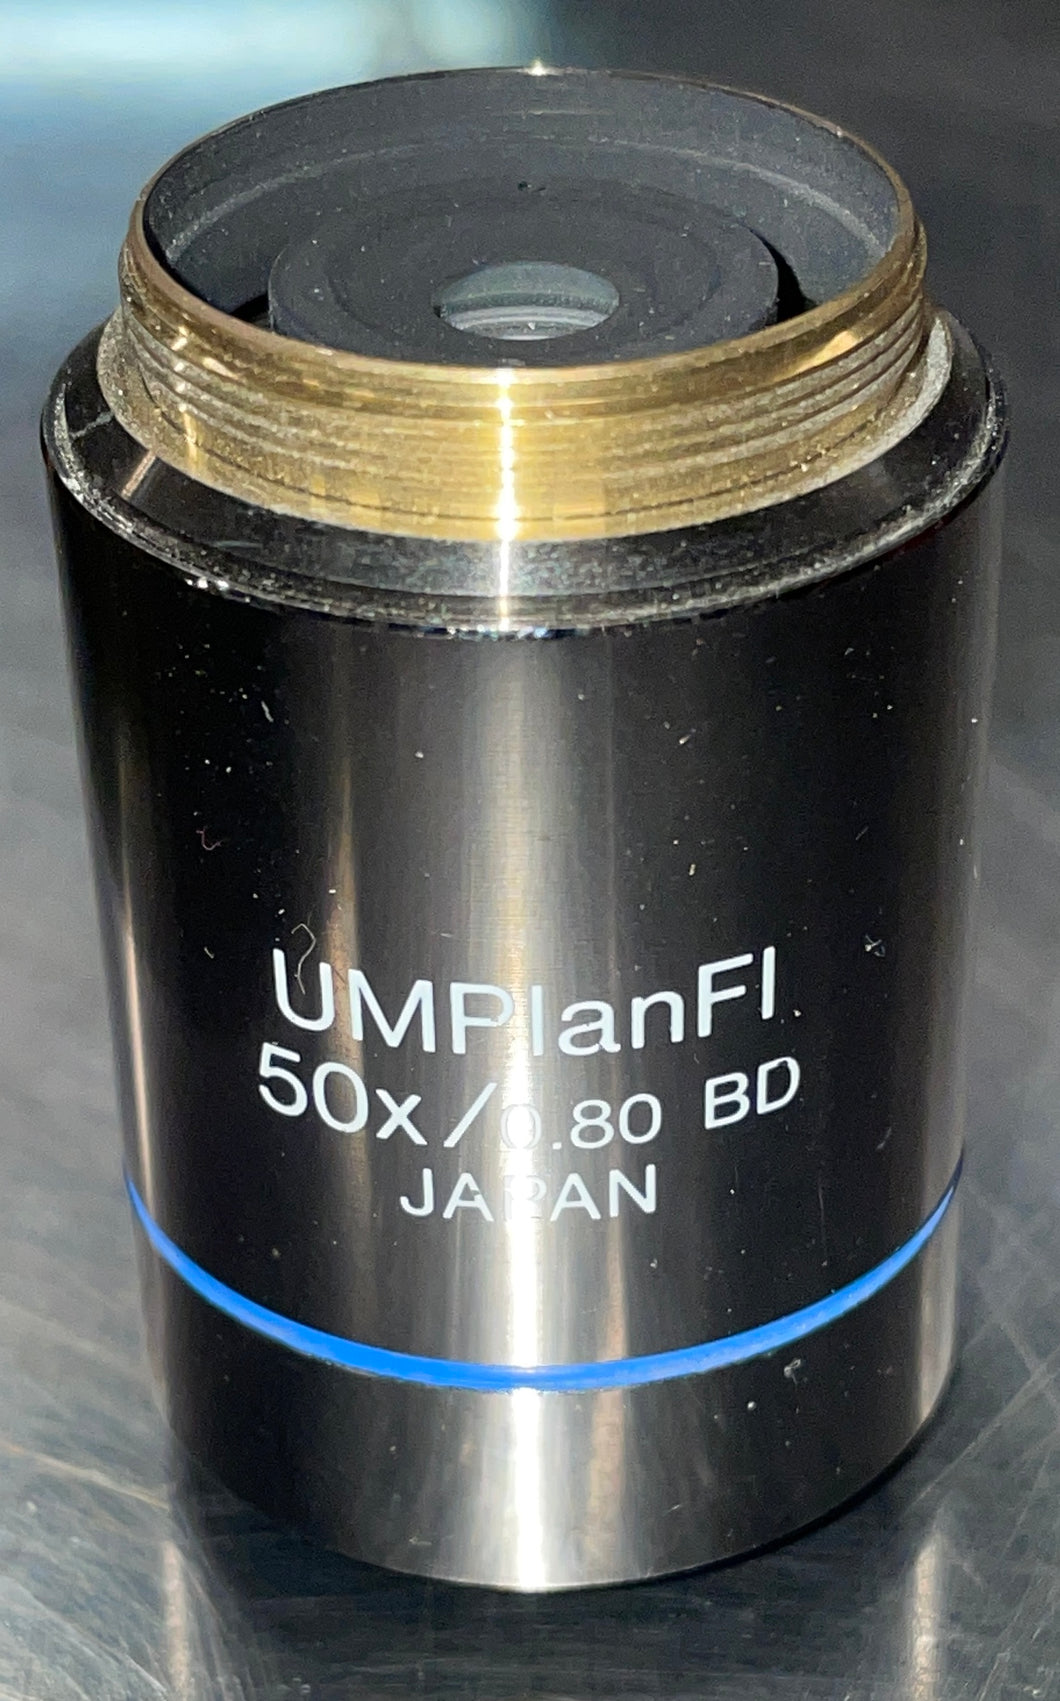 Olympus UMPlanFI 50x/0.80 BD Microscope Objective